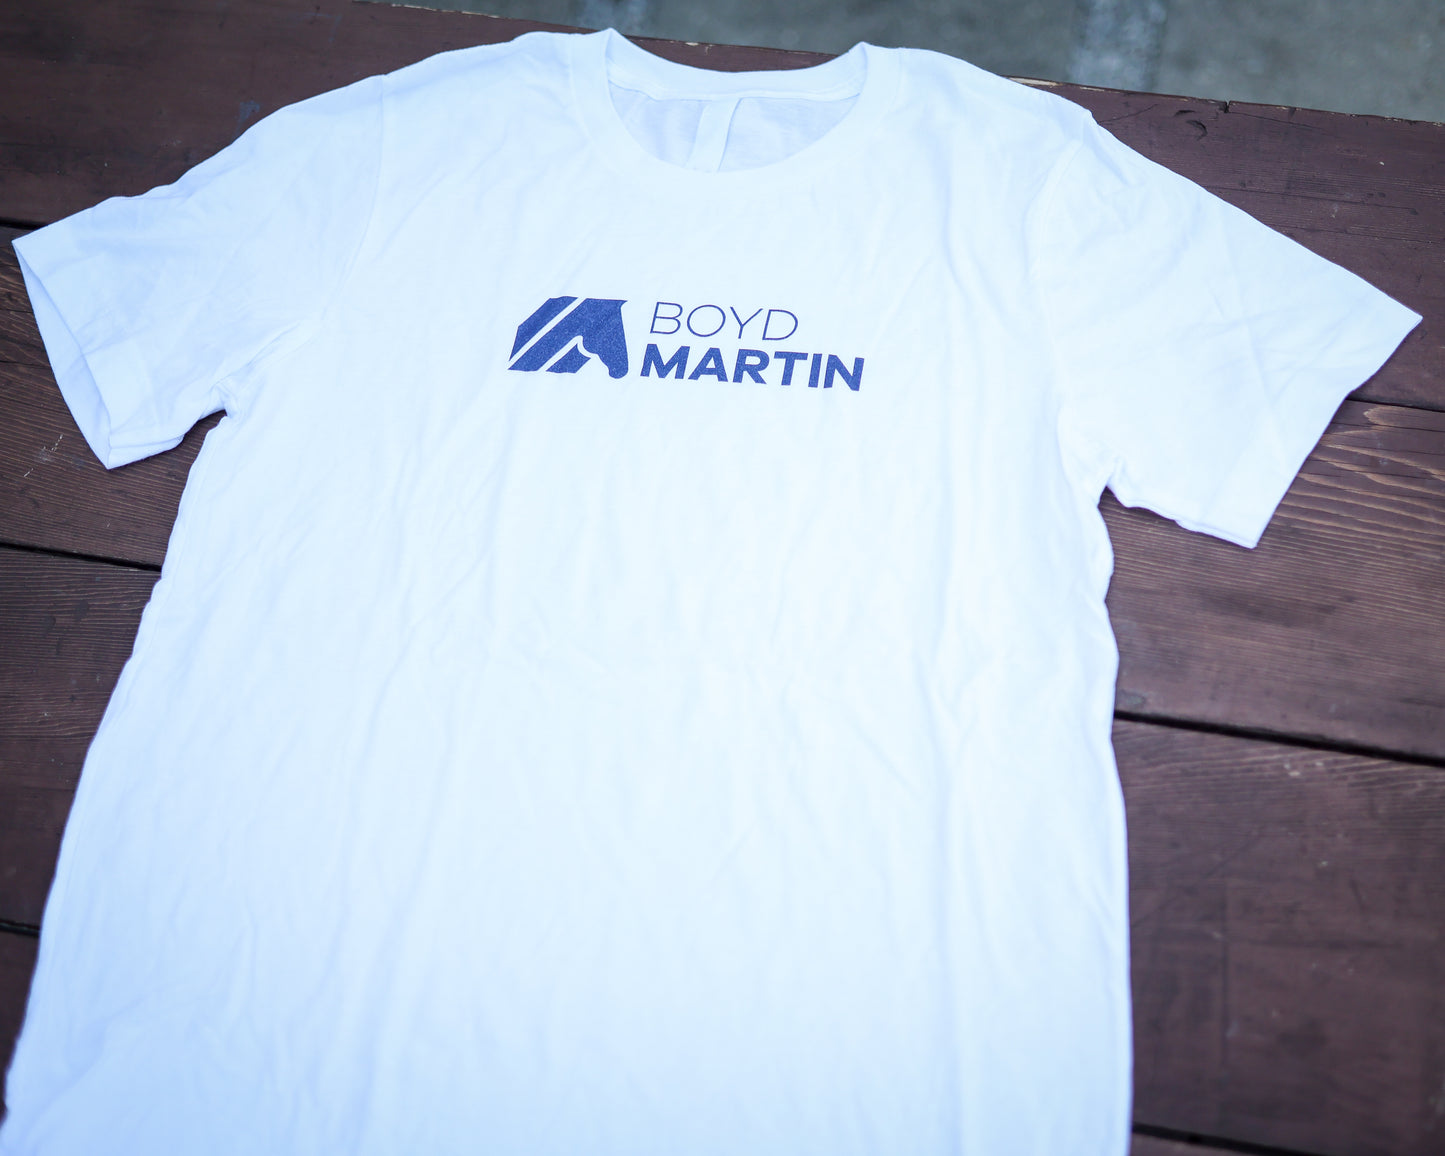 Boyd Martin Unisex Tee Shirt